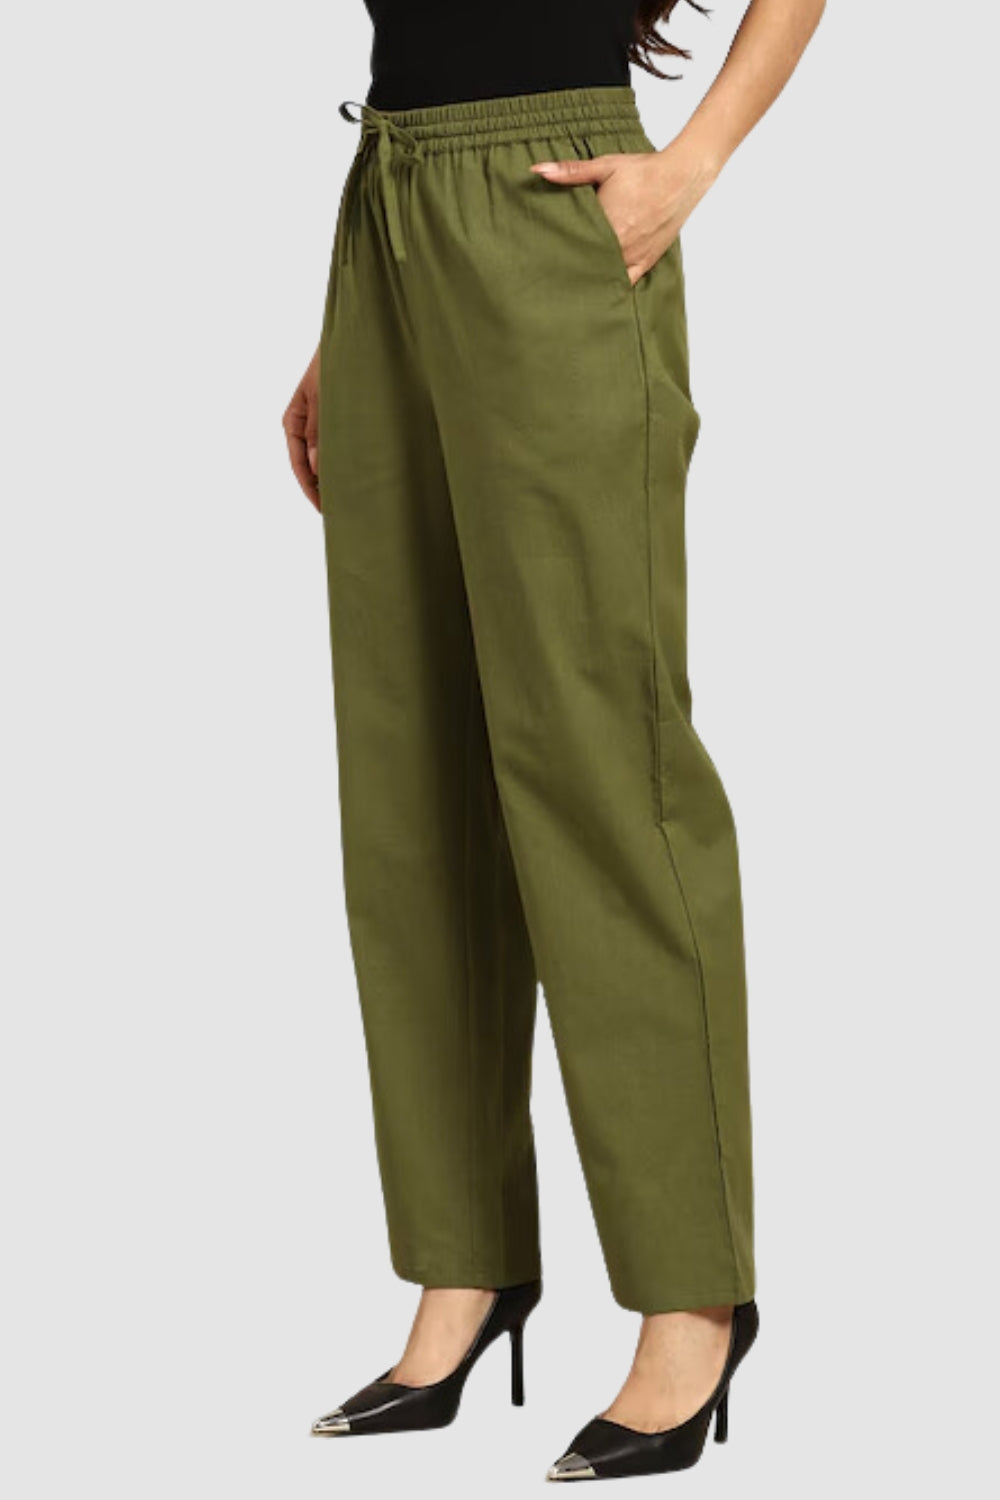 Olive Green Jogger Trouser